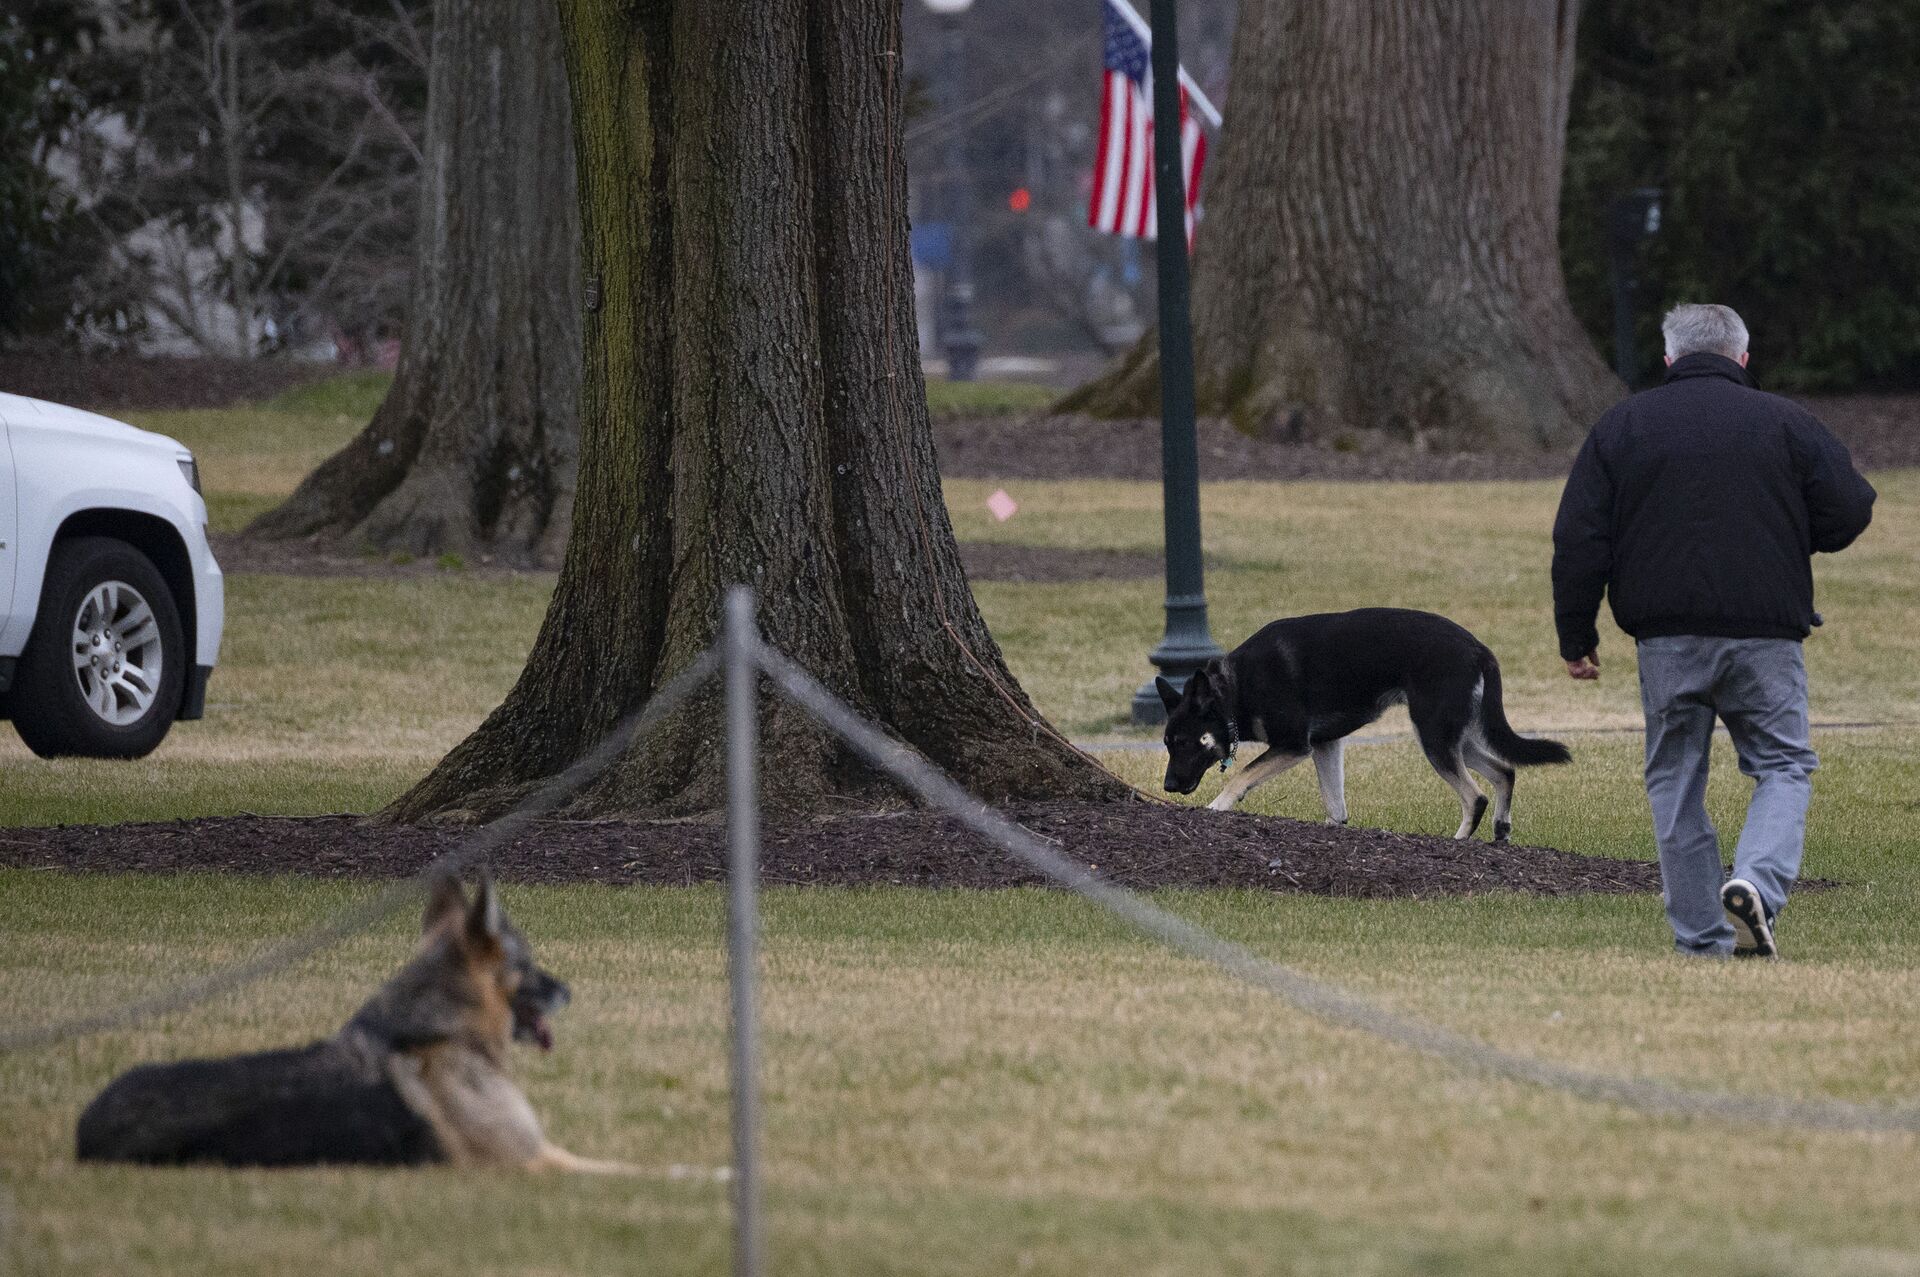 Comeback Kids: Biden Family Dogs Return to White House After Nipping Incident - Sputnik International, 1920, 24.03.2021